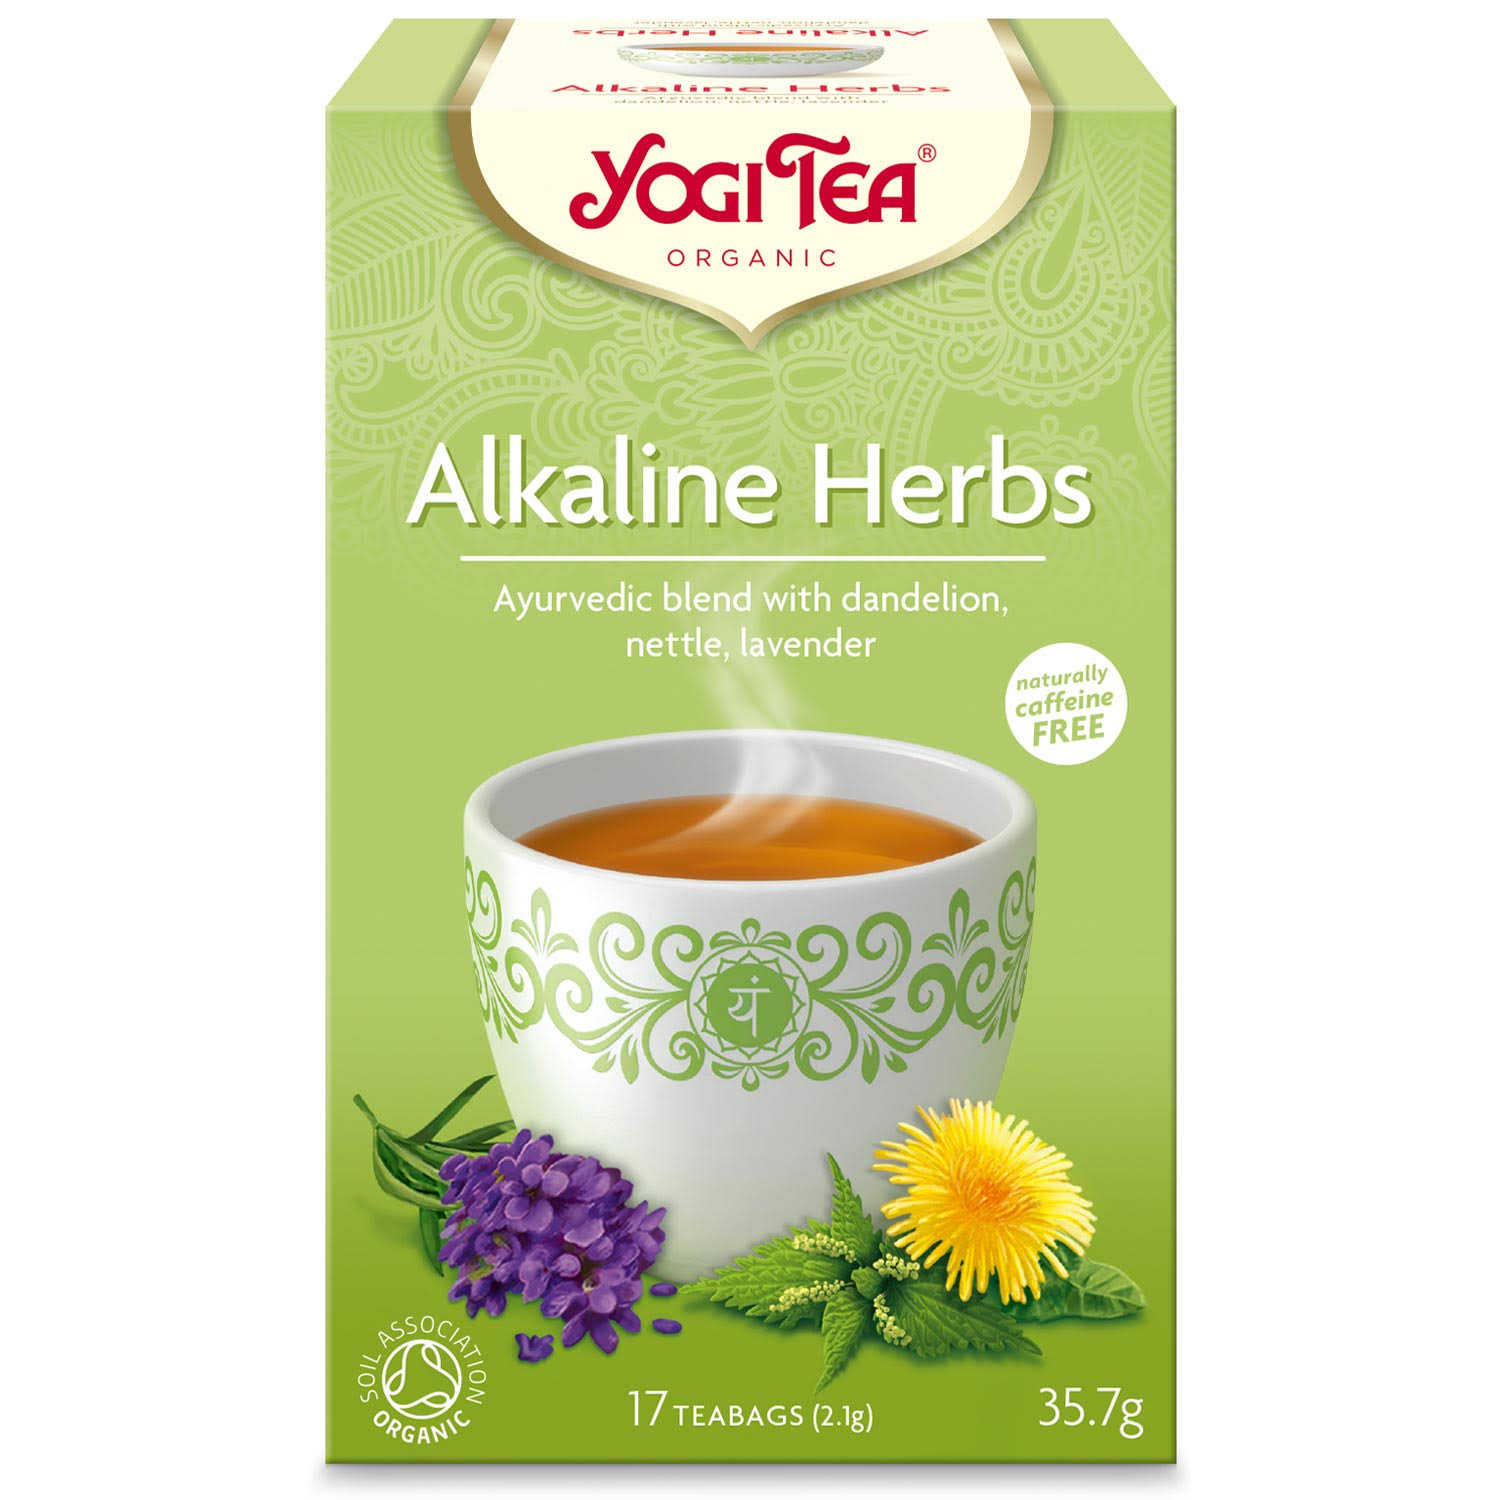 Yogi Tea Organic Alkaline Herbs Tea - 35.7g, 17ct